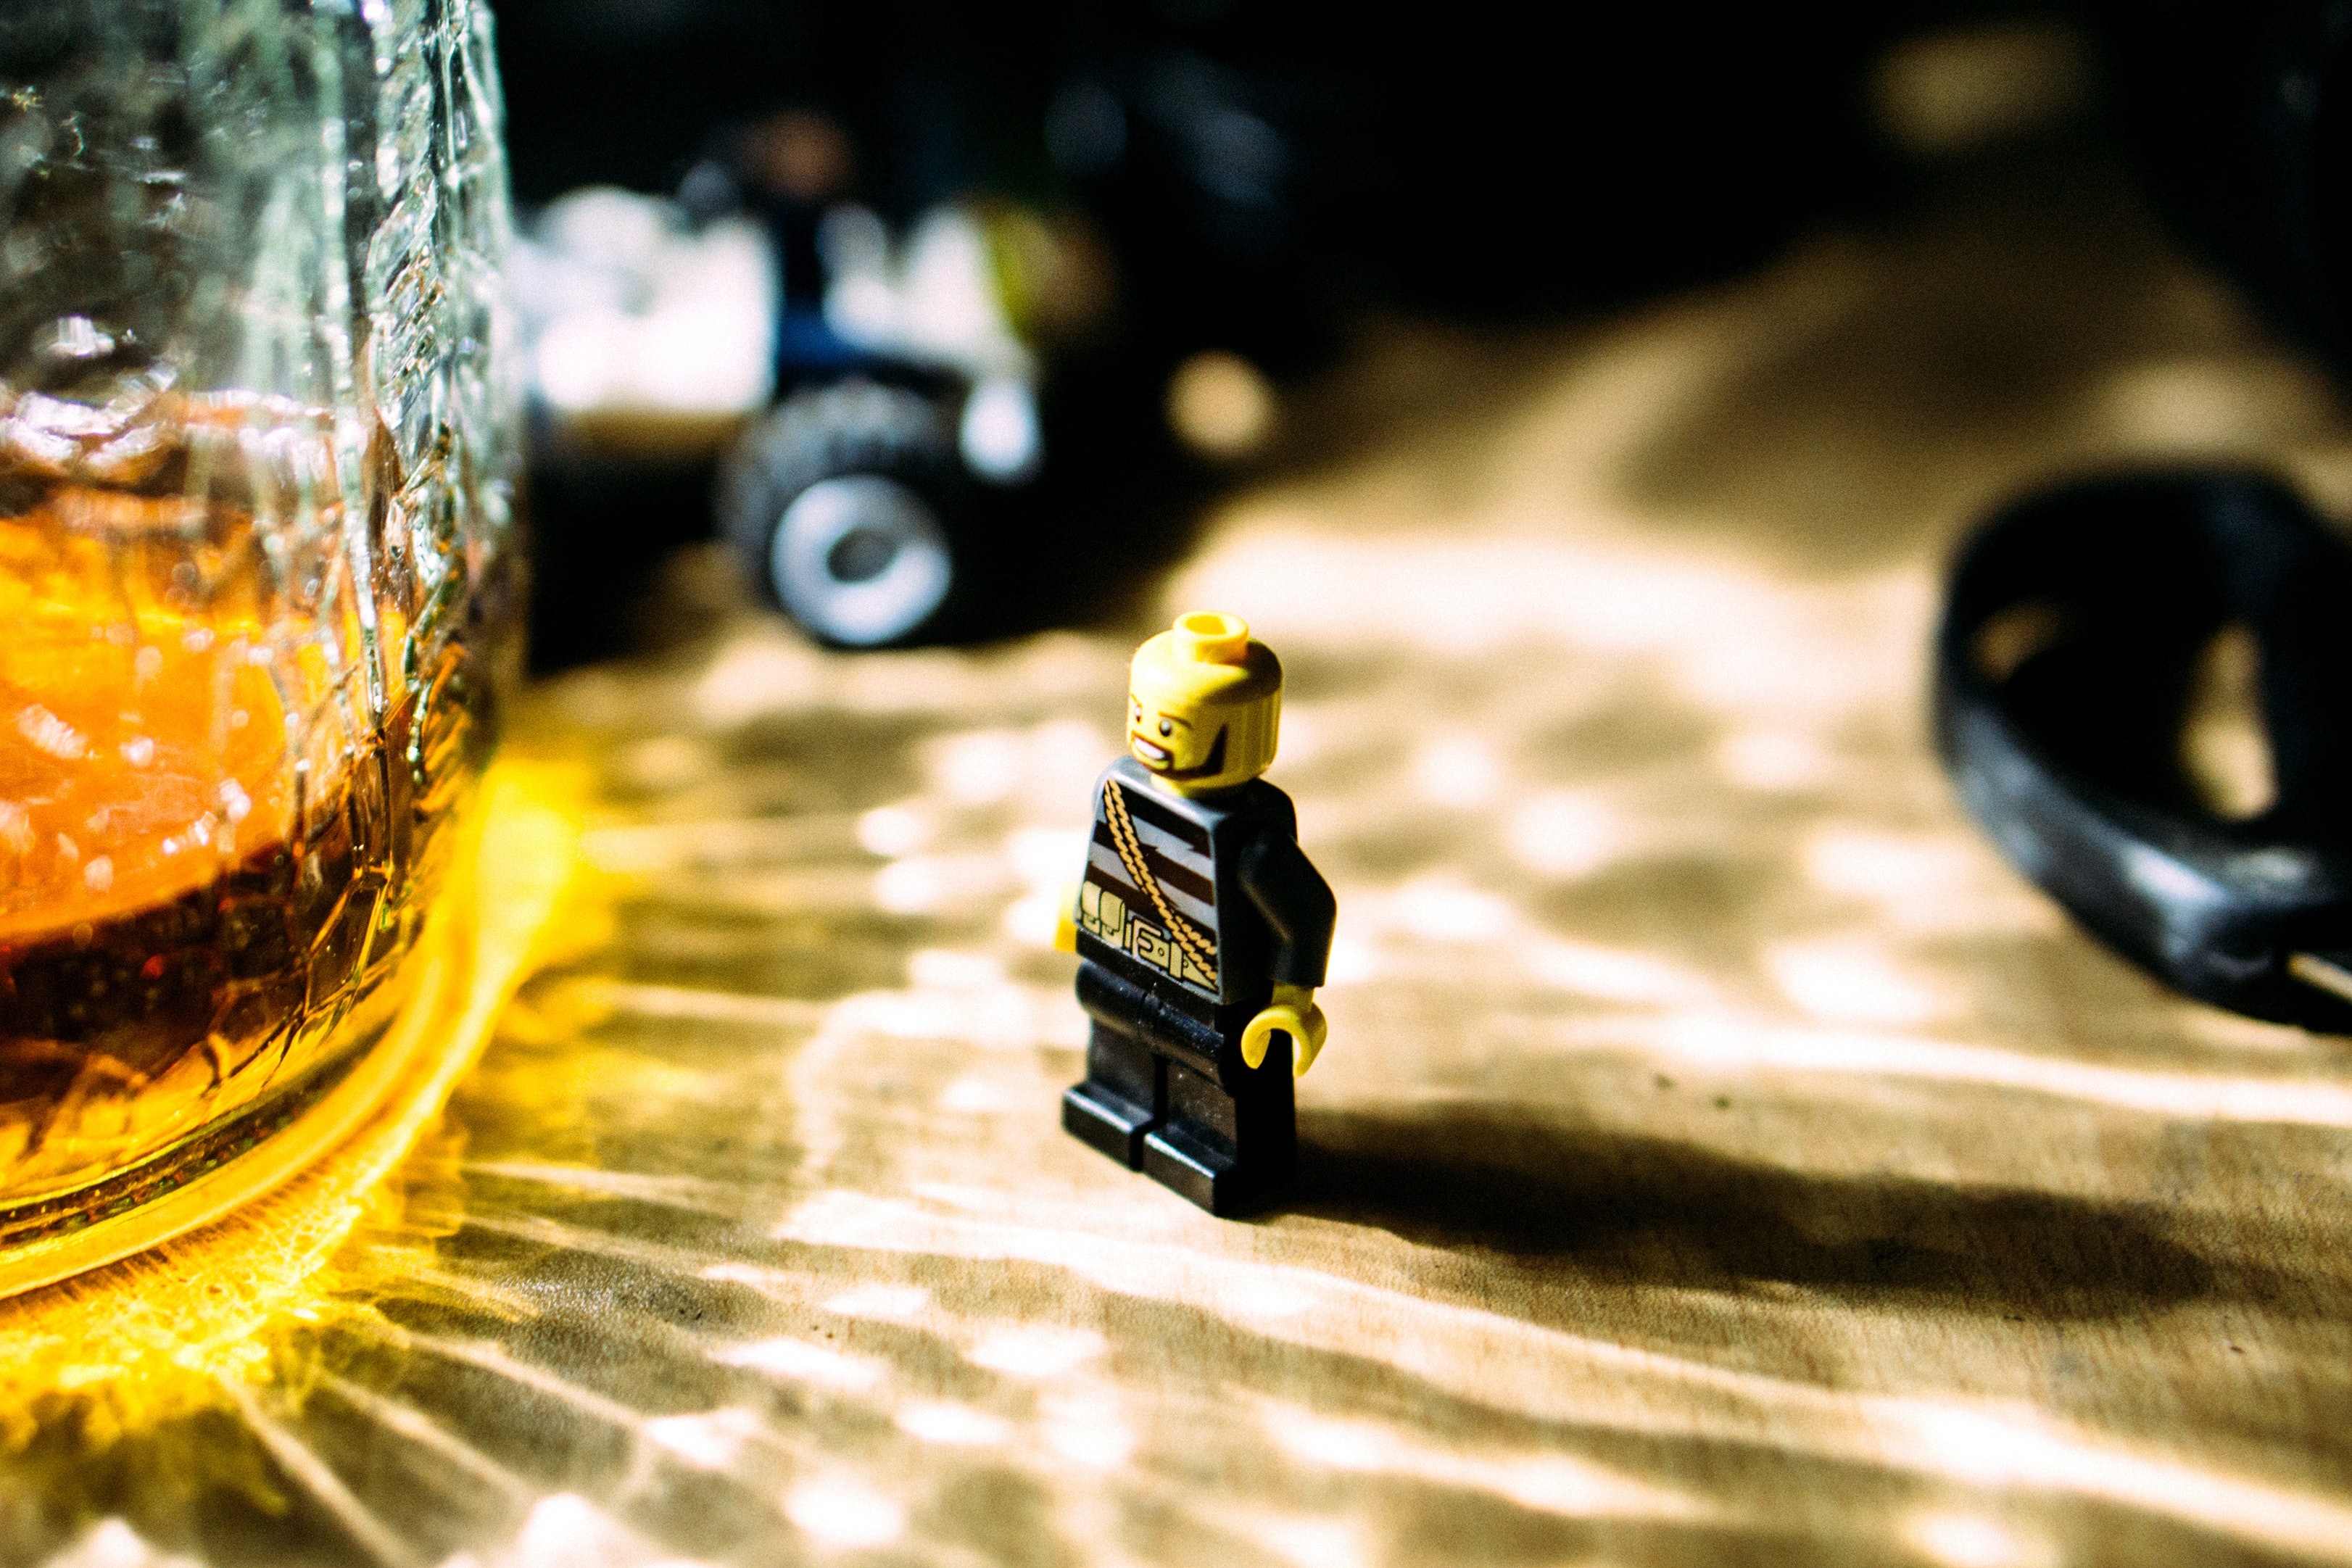 black and yellow lego figure